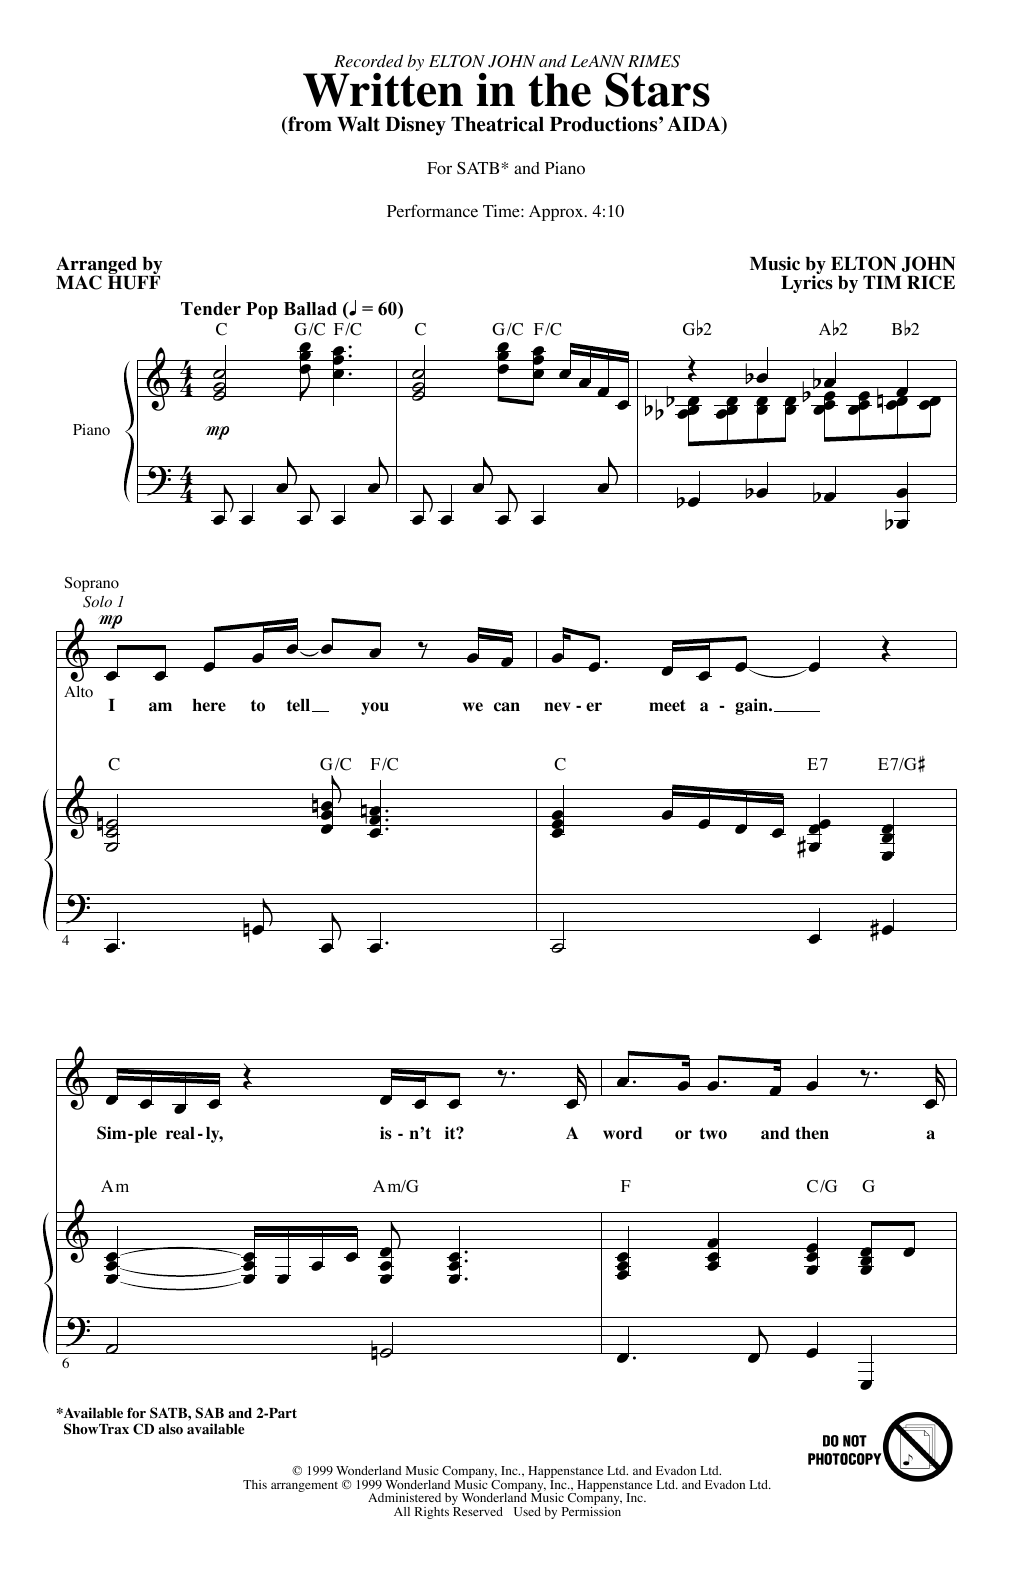 Elton John & LeAnn Rimes Written In The Stars (from Aida) (arr. Mac Huff) Sheet Music Notes & Chords for 2-Part Choir - Download or Print PDF